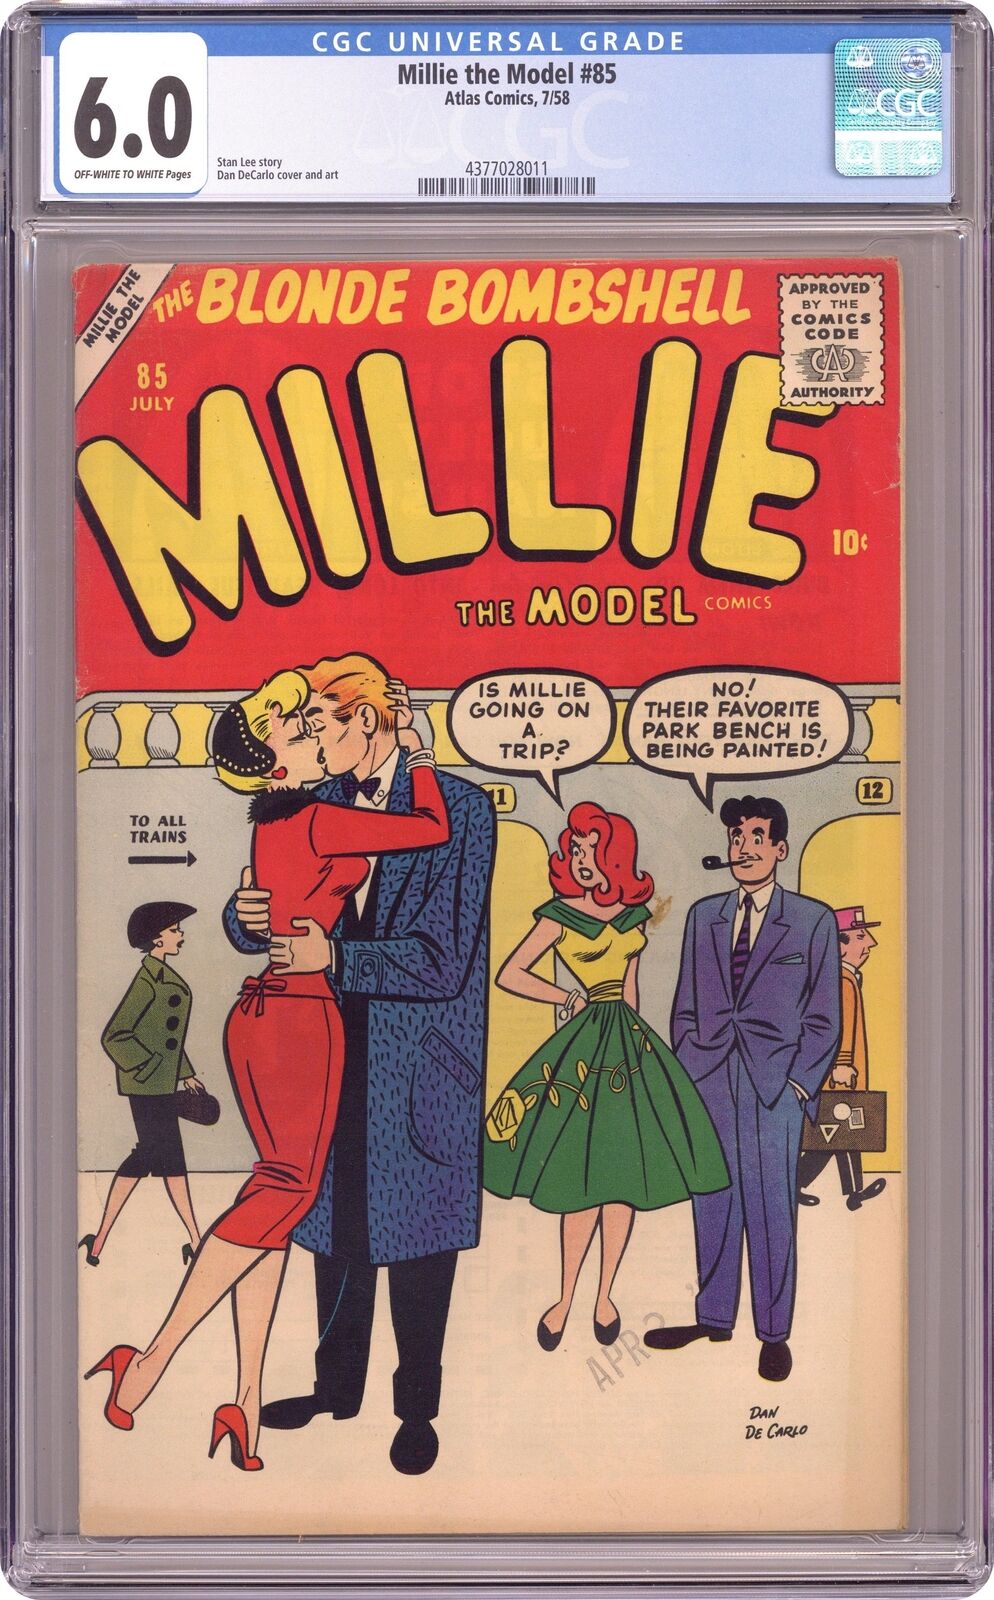 Millie the Model #85 CGC 6.0 1958 4377028011